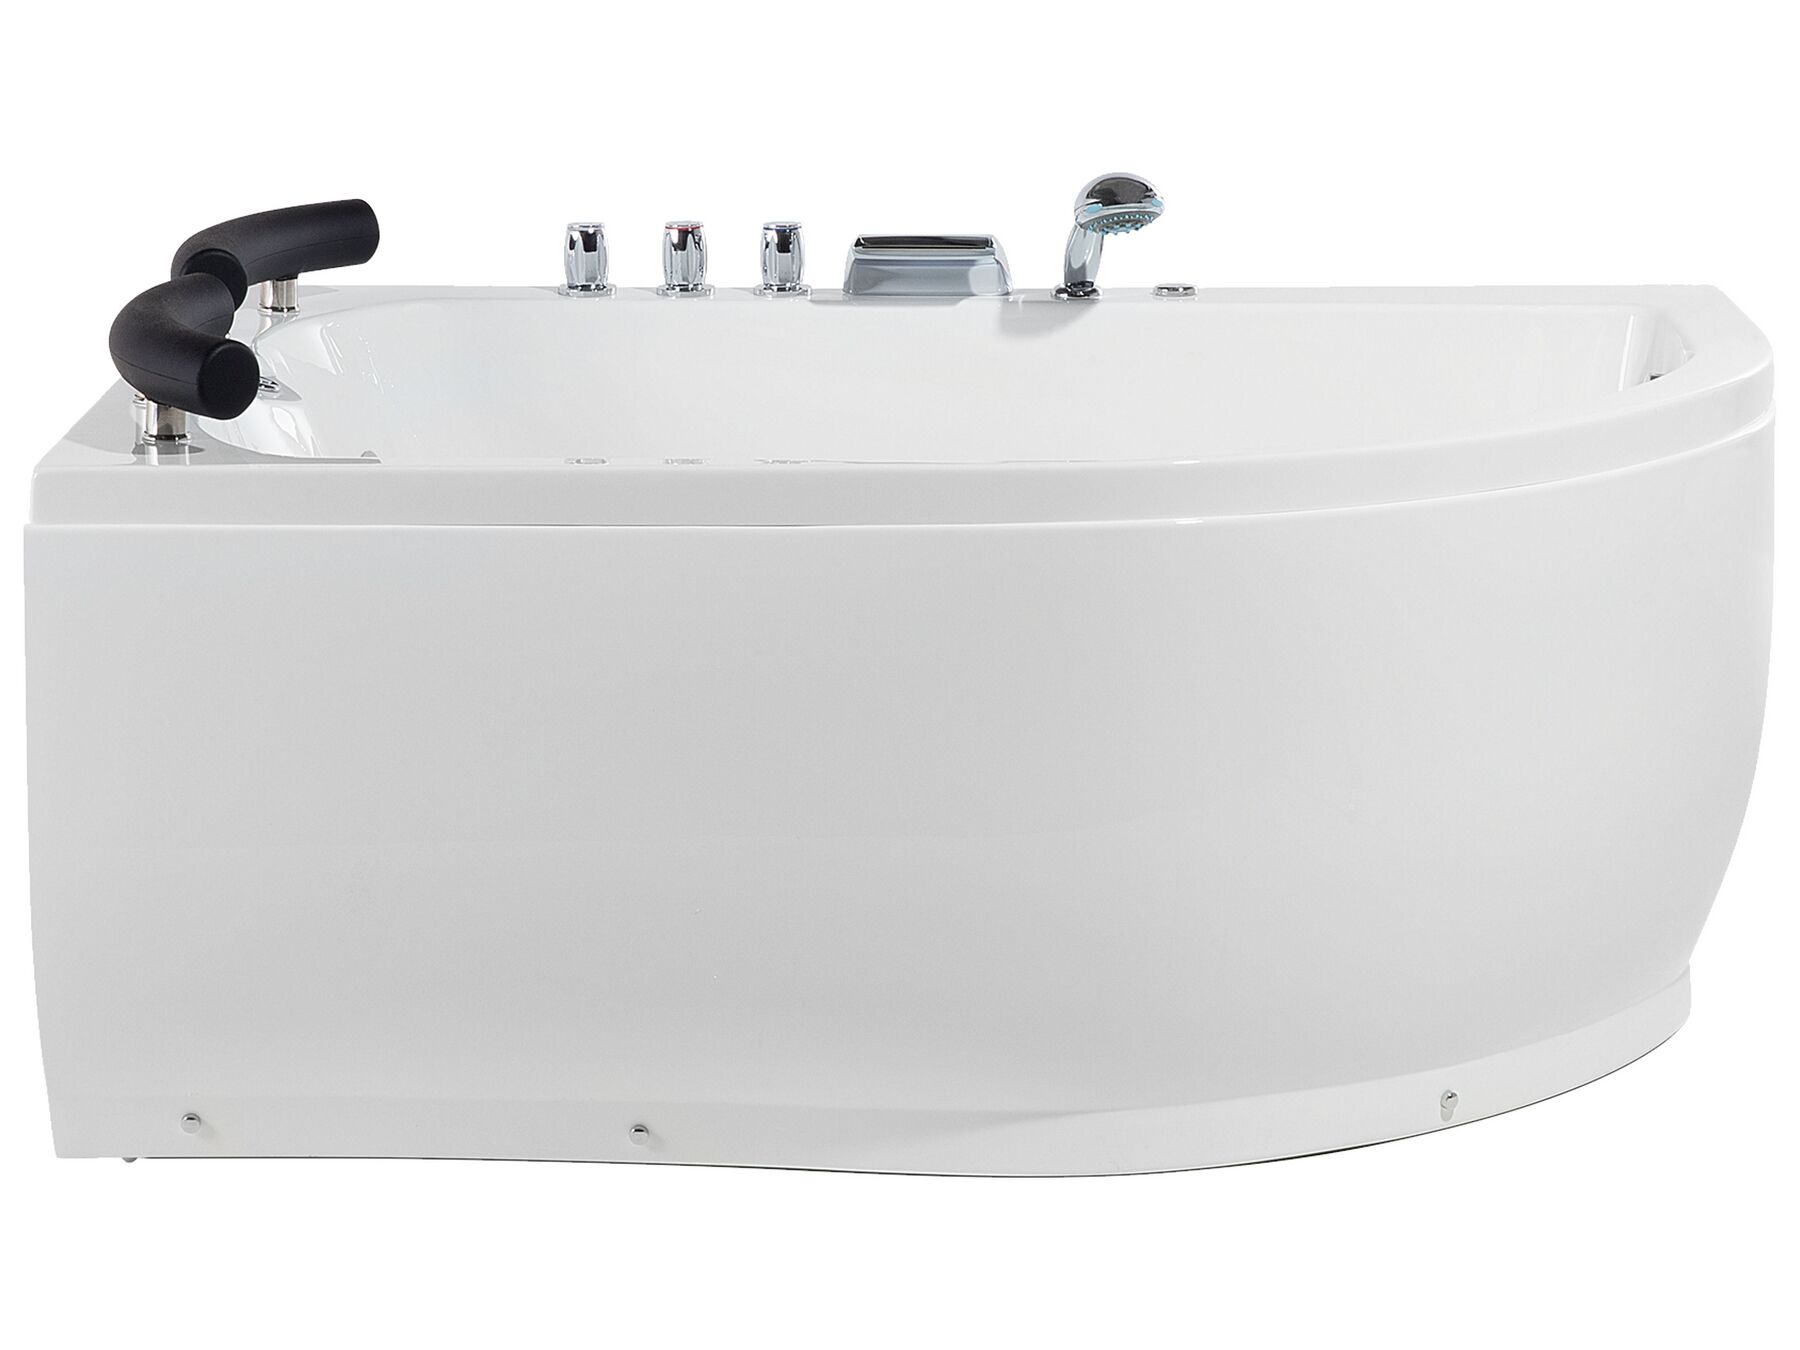 Whirlpool Badewanne weiß Eckmodell mit LED rechts 160 x 113 cm PARADISO_680854